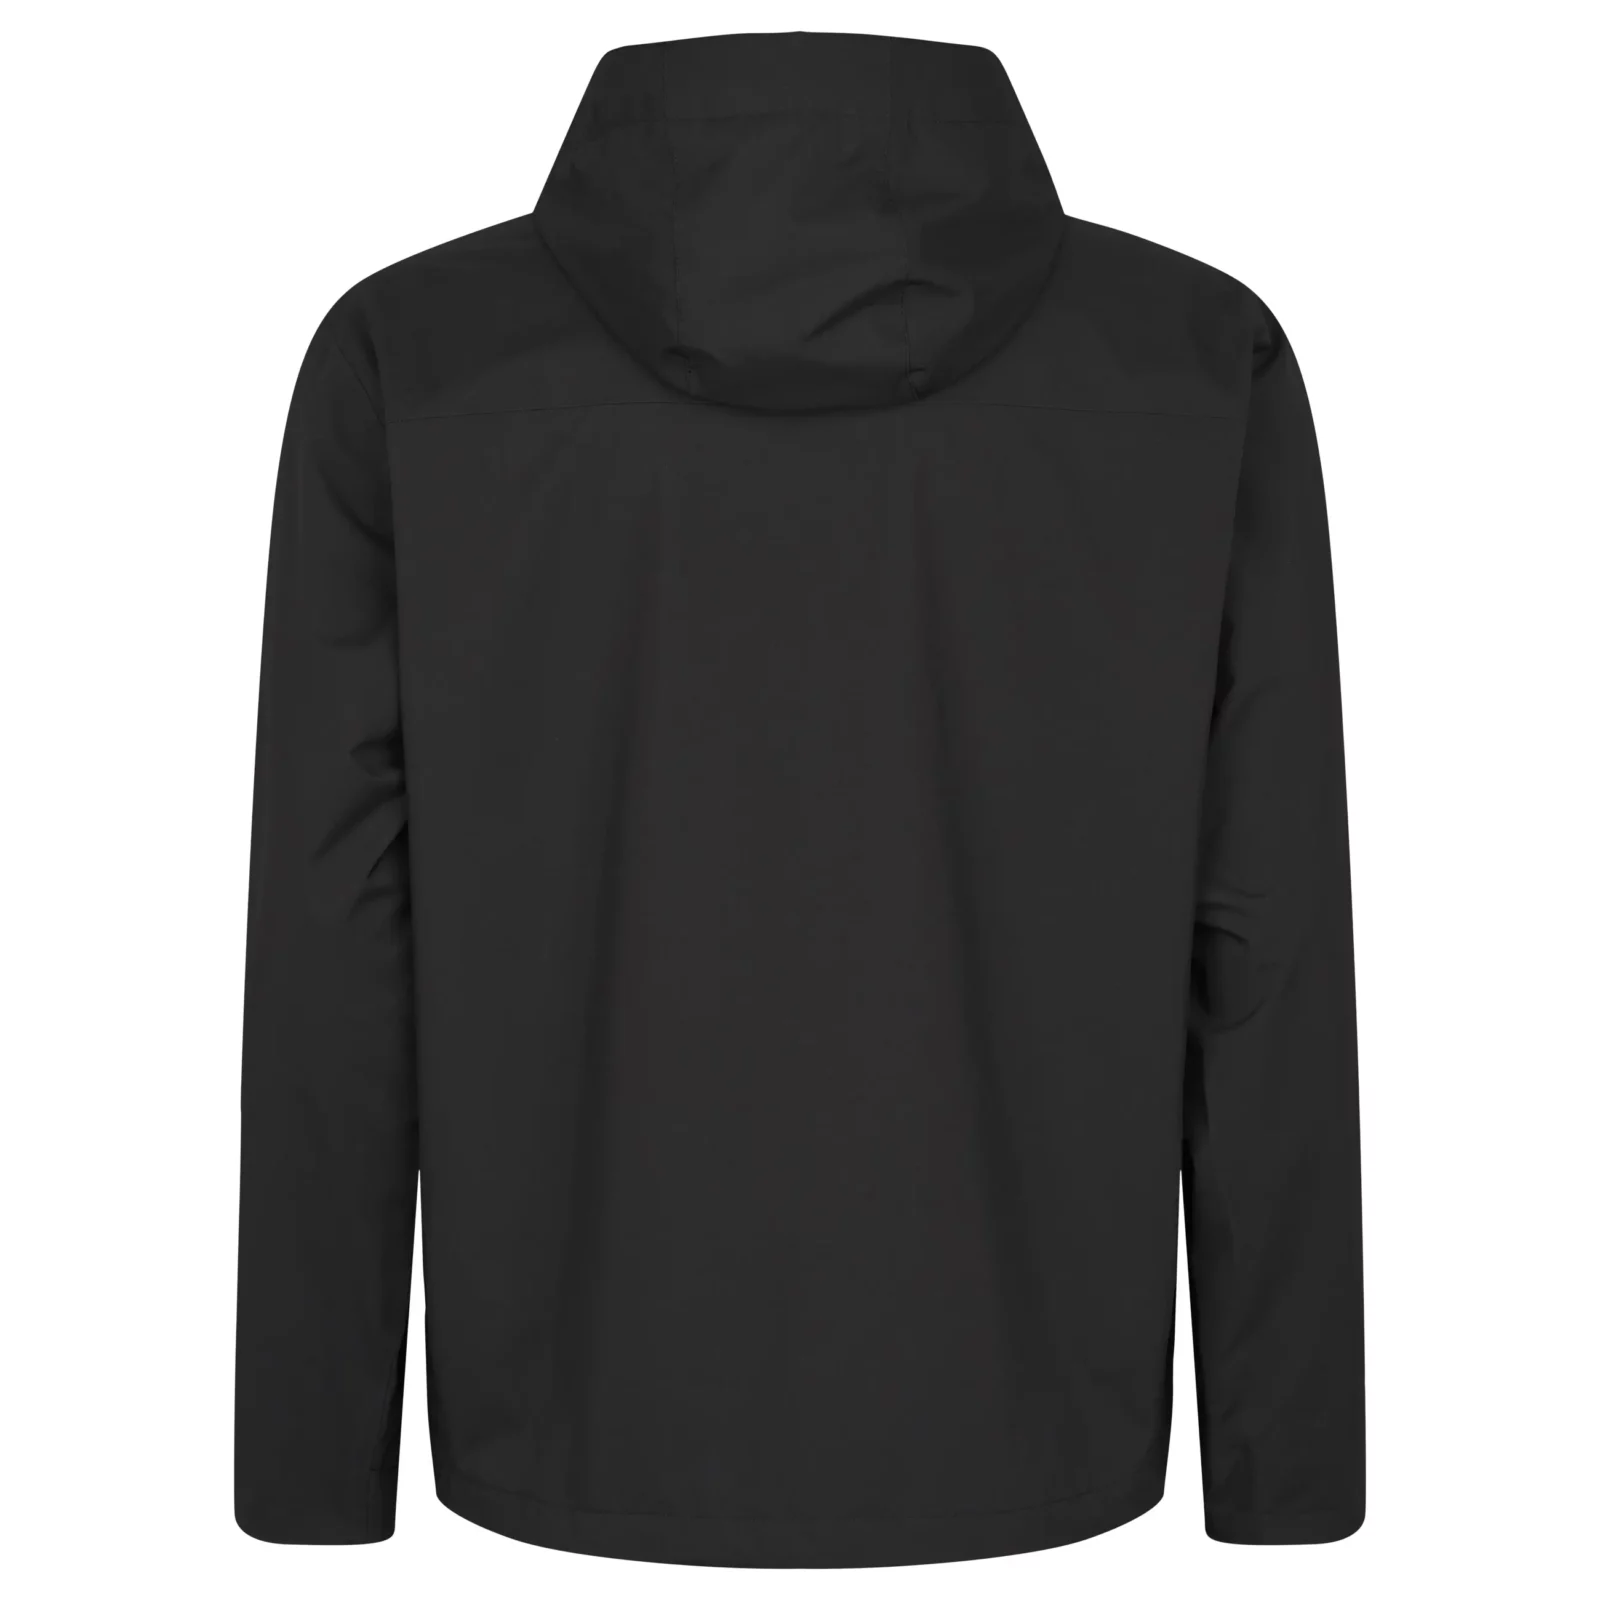 All size_41707_musta_waterproof jacket_41707 - 0099 Black - Extra 1 (1)